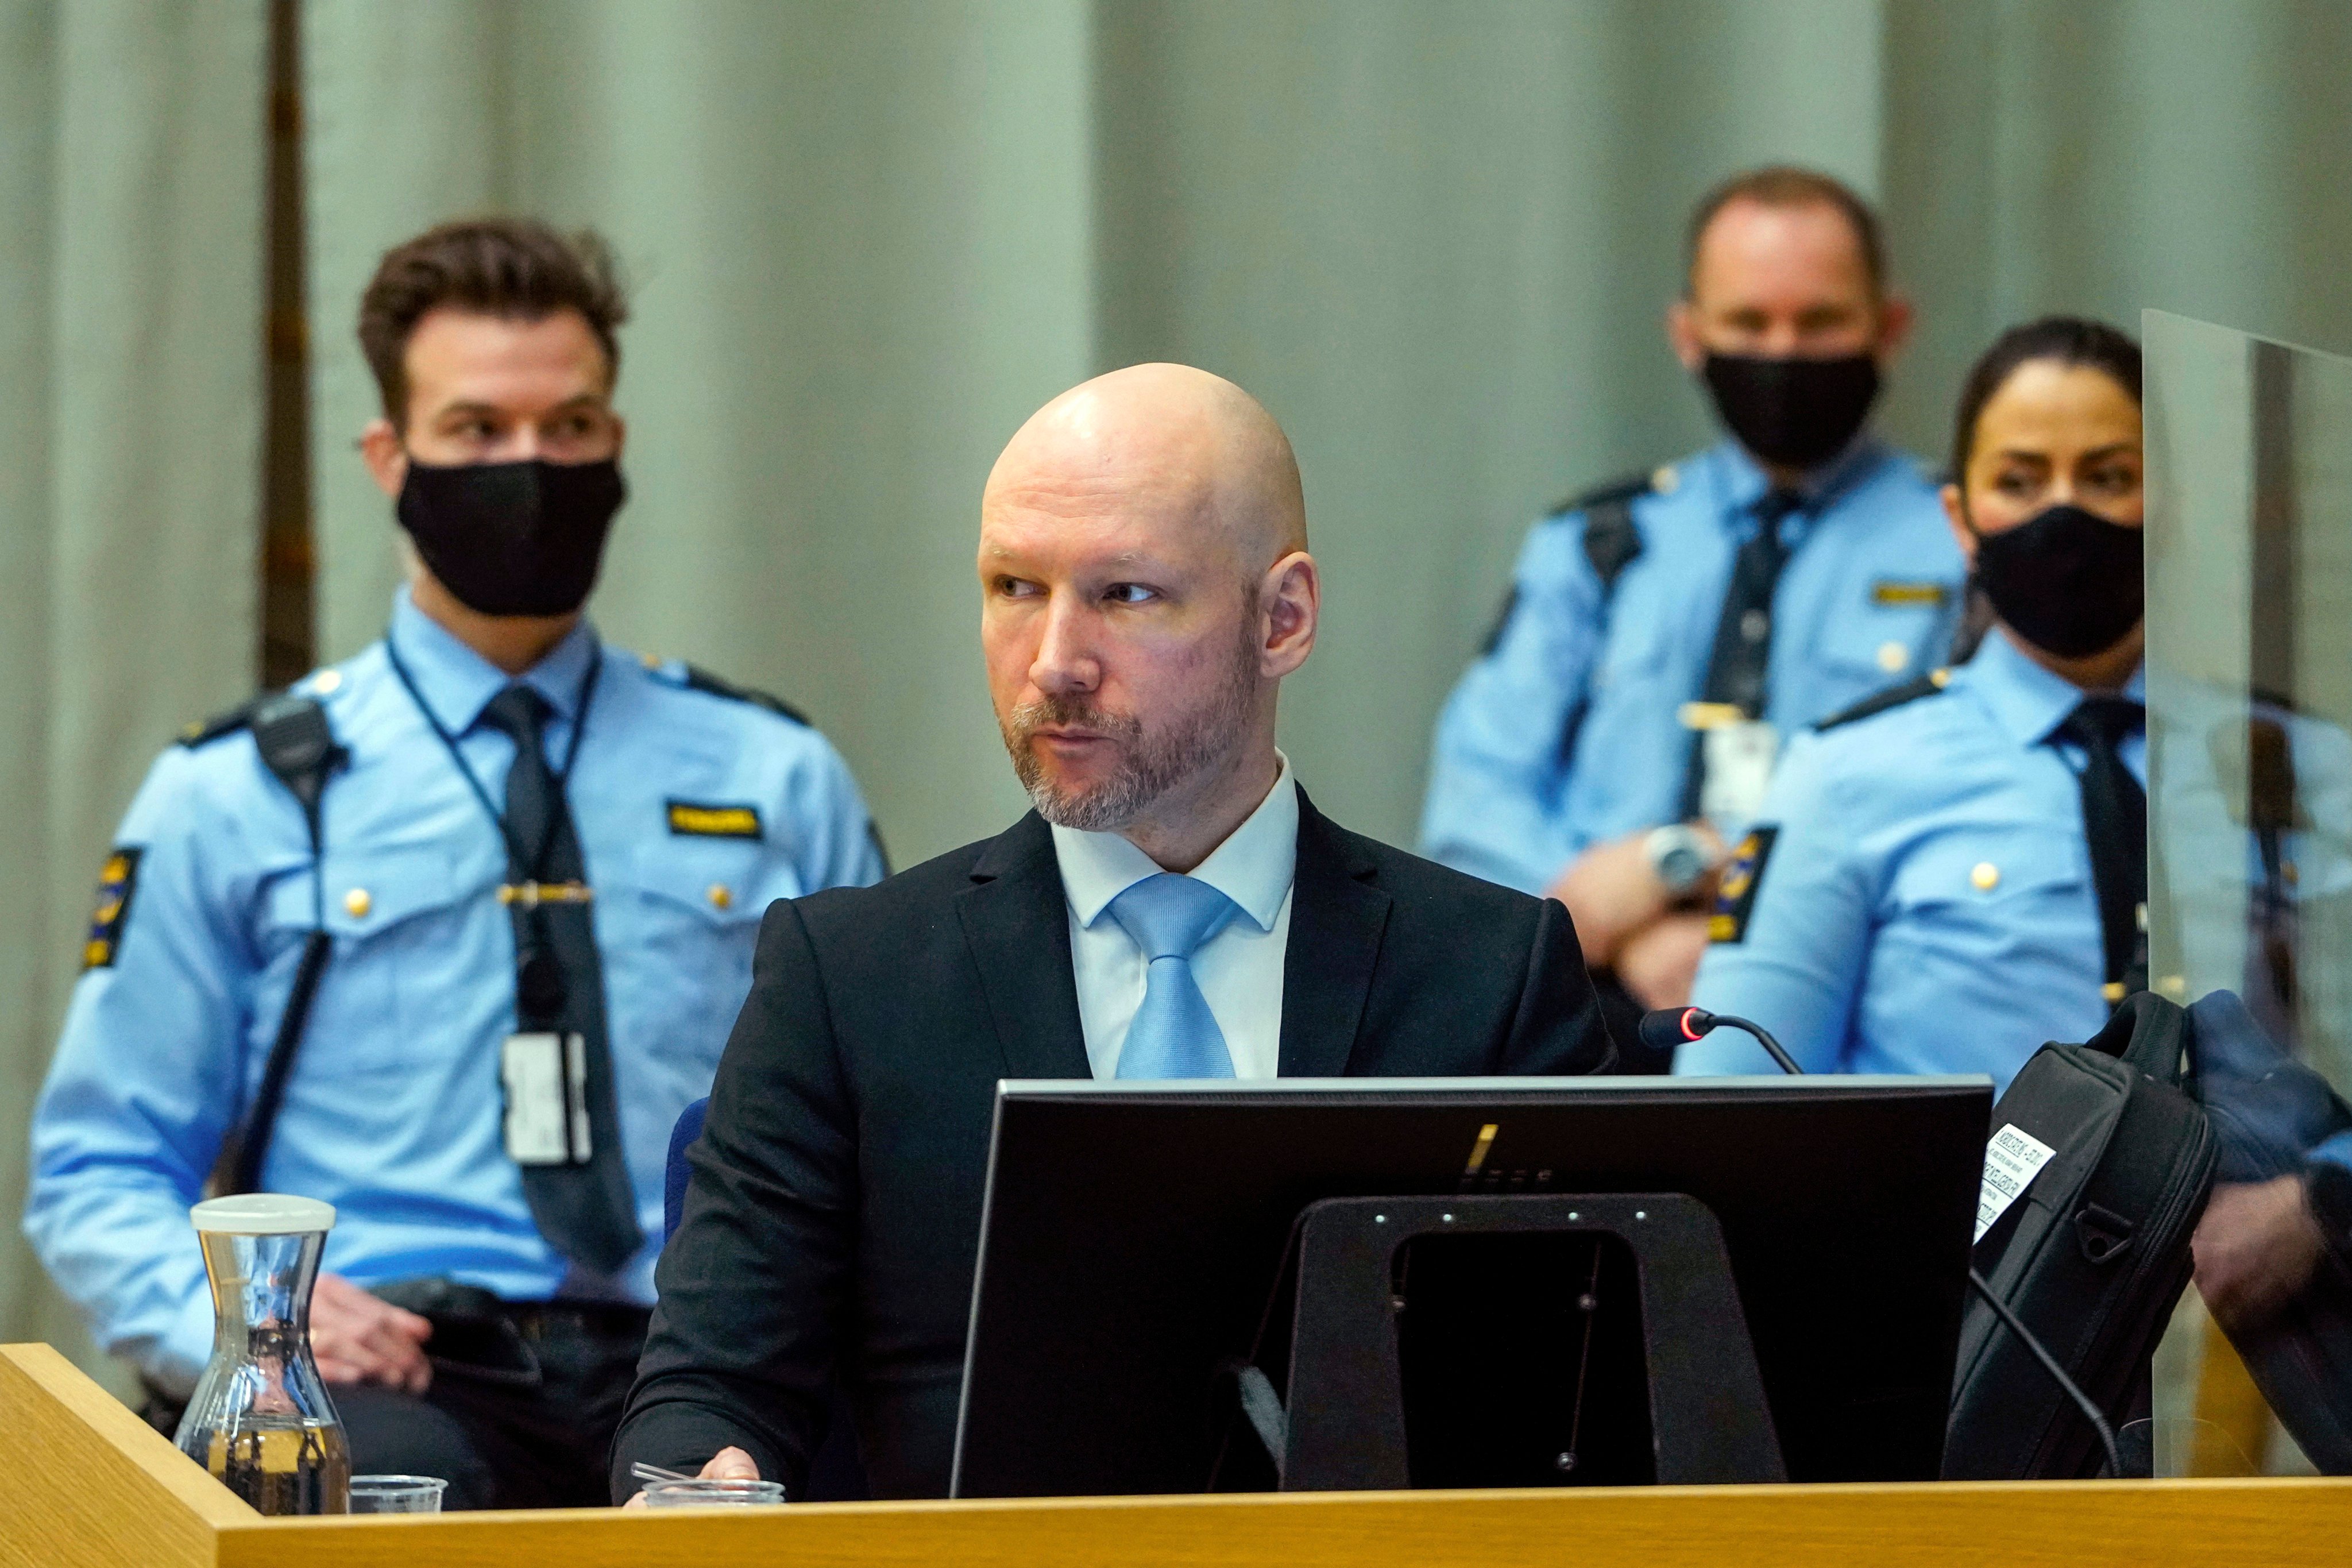 Convicted mass murderer Anders Behring Breivik in 2022. File photo: AP